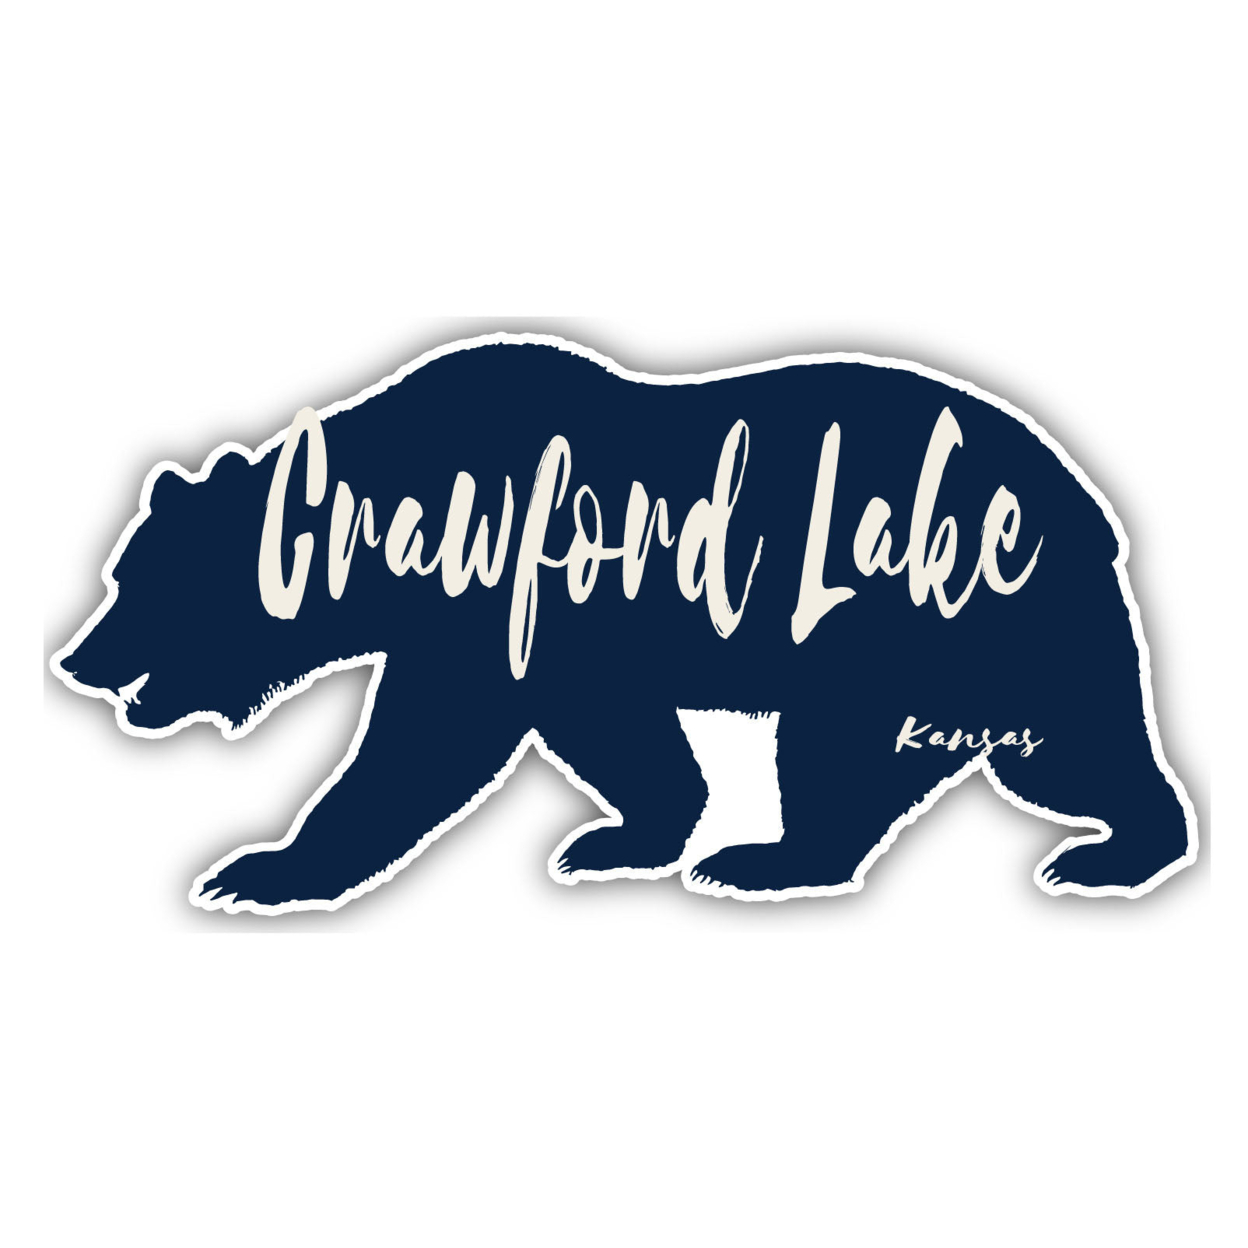 Crawford Lake Kansas Souvenir Decorative Stickers (Choose Theme And Size) - 4-Pack, 4-Inch, Bear